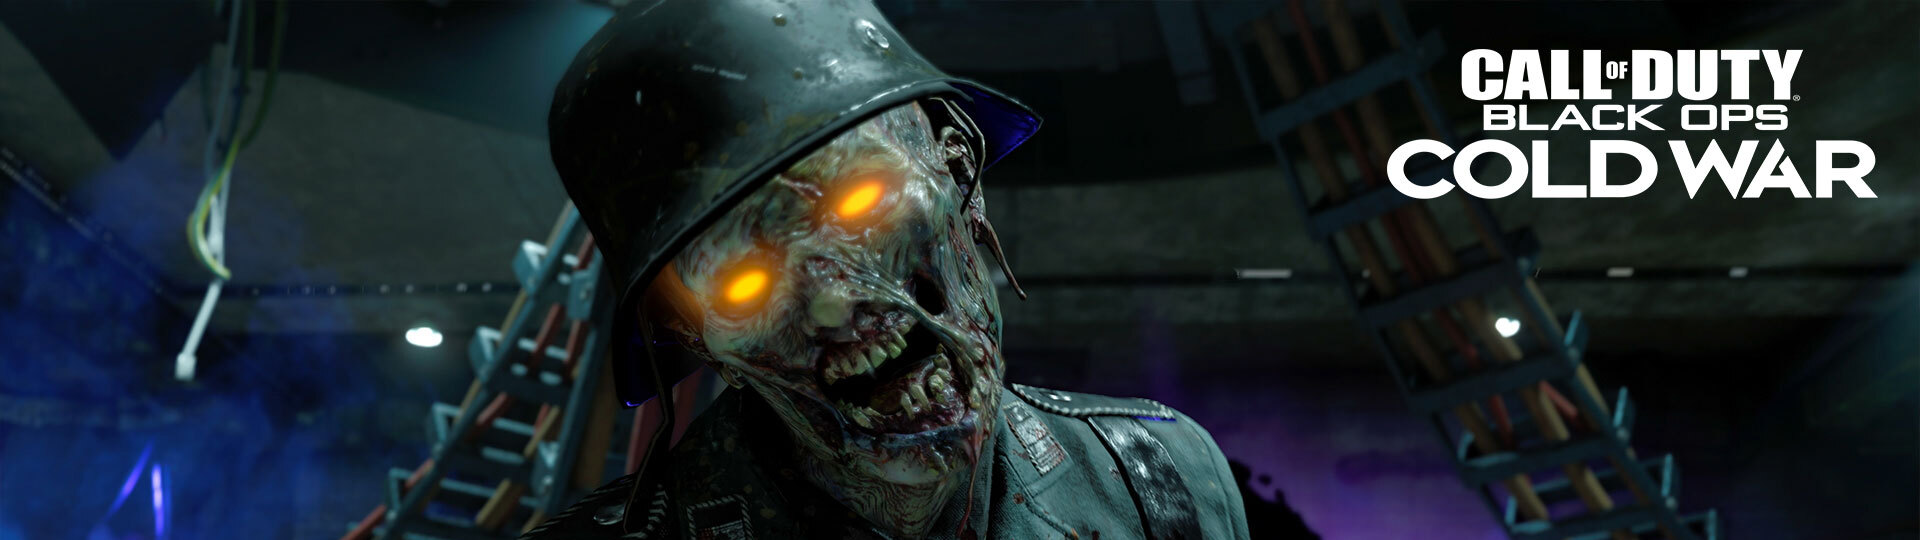 Debutový Zombie trailer z CoD: Black Ops Cold War | Videa